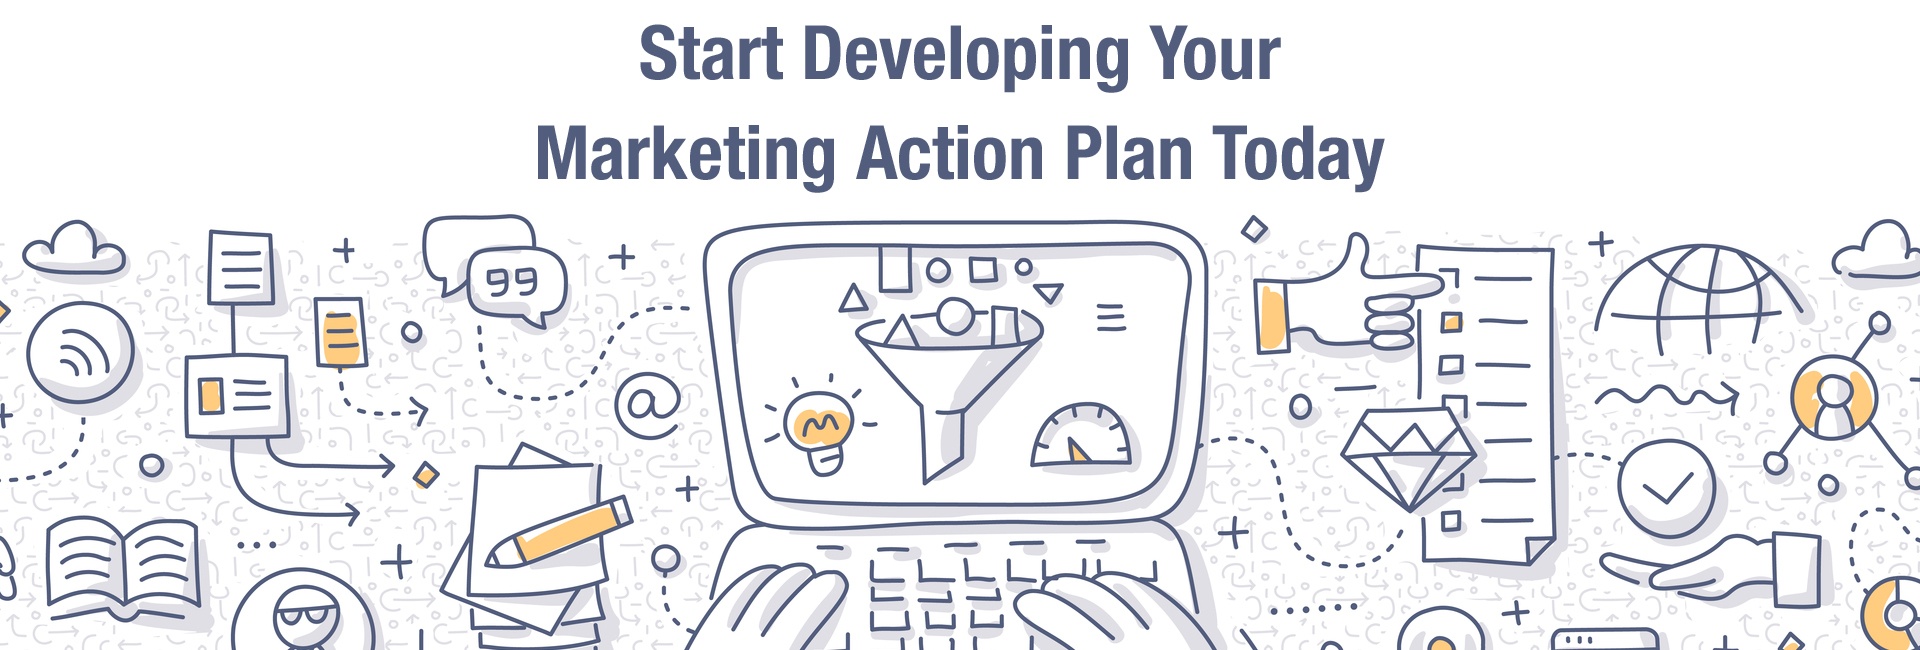 marketing-action-plan.jpg